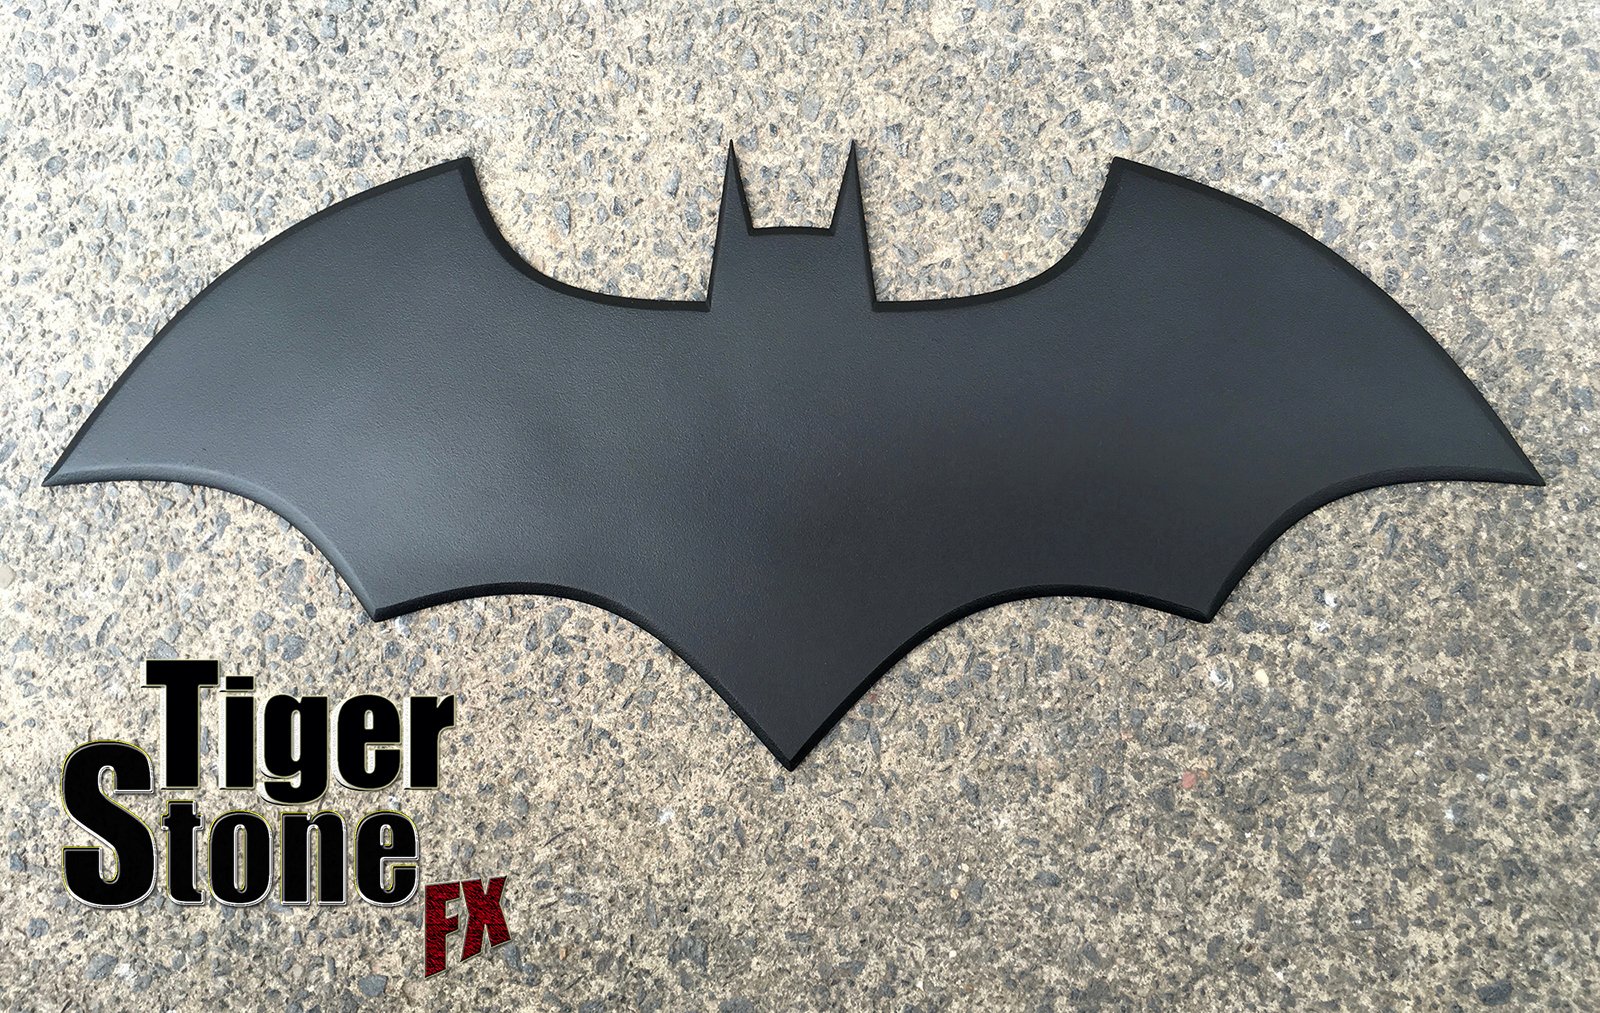 Batman Chest Emblem Unique New 52 Batman Inspired Chest Emblem Tiger Stone Fx